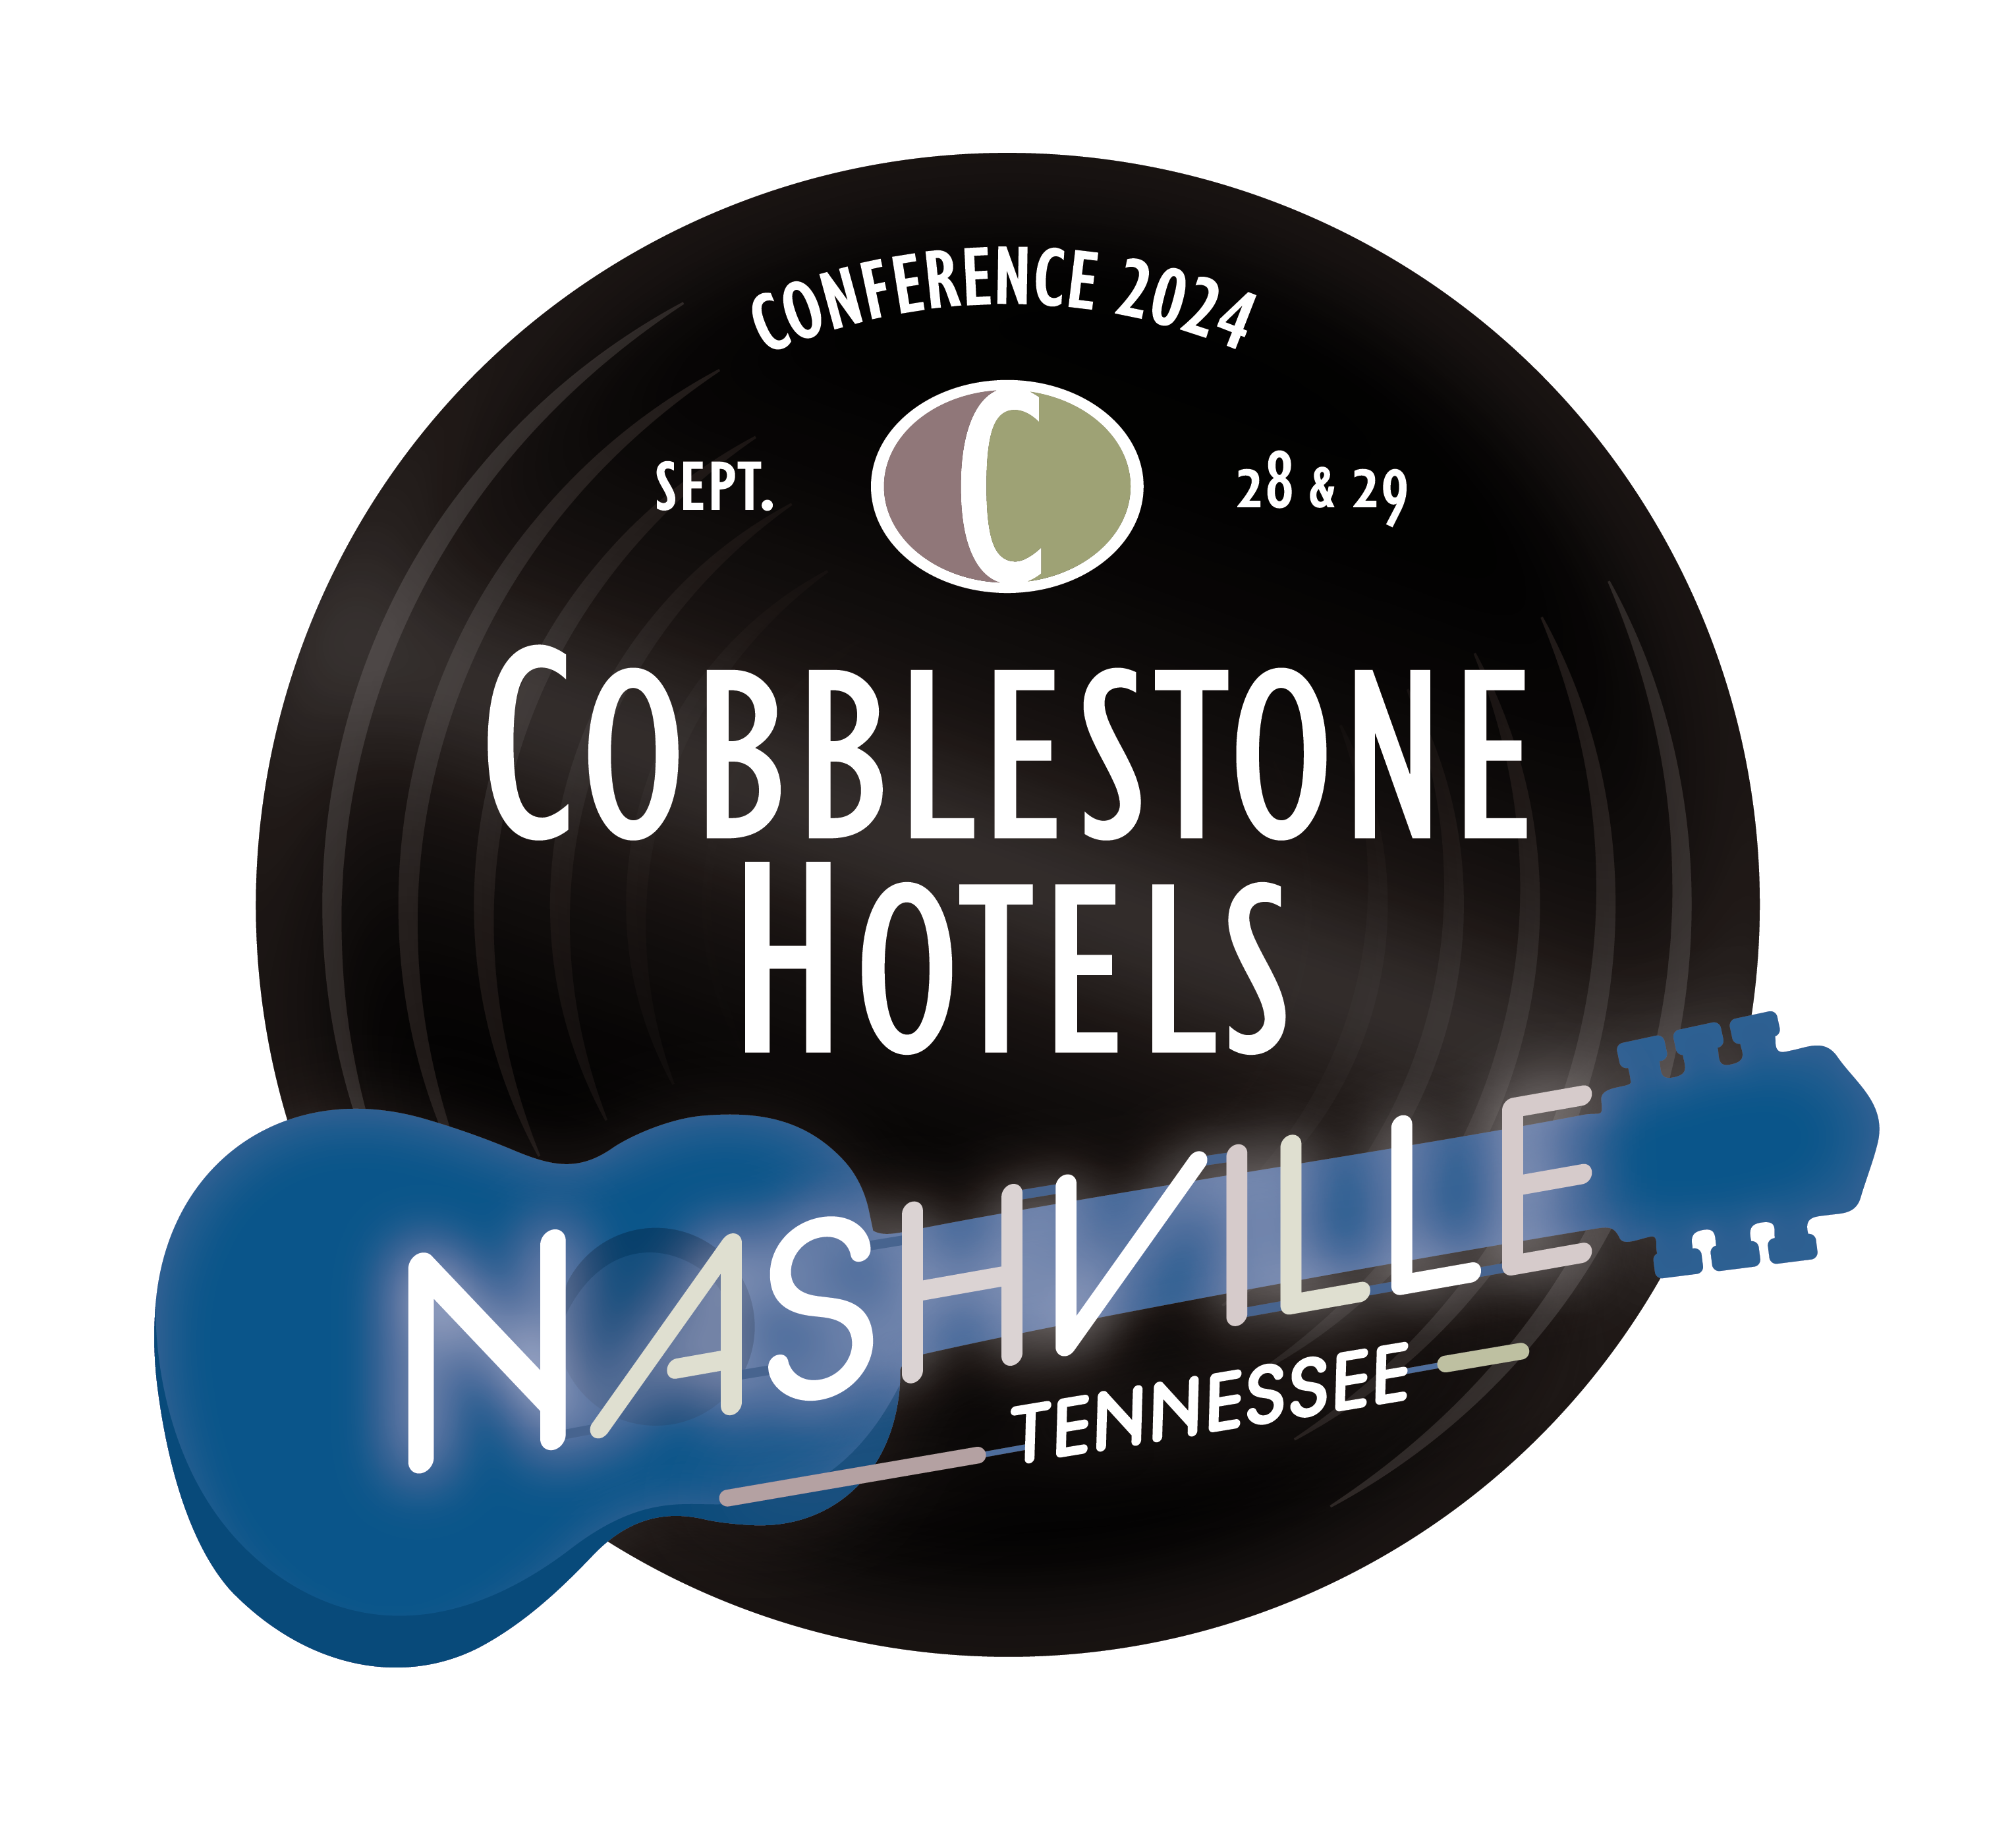 Cobblestone Hotels Conference